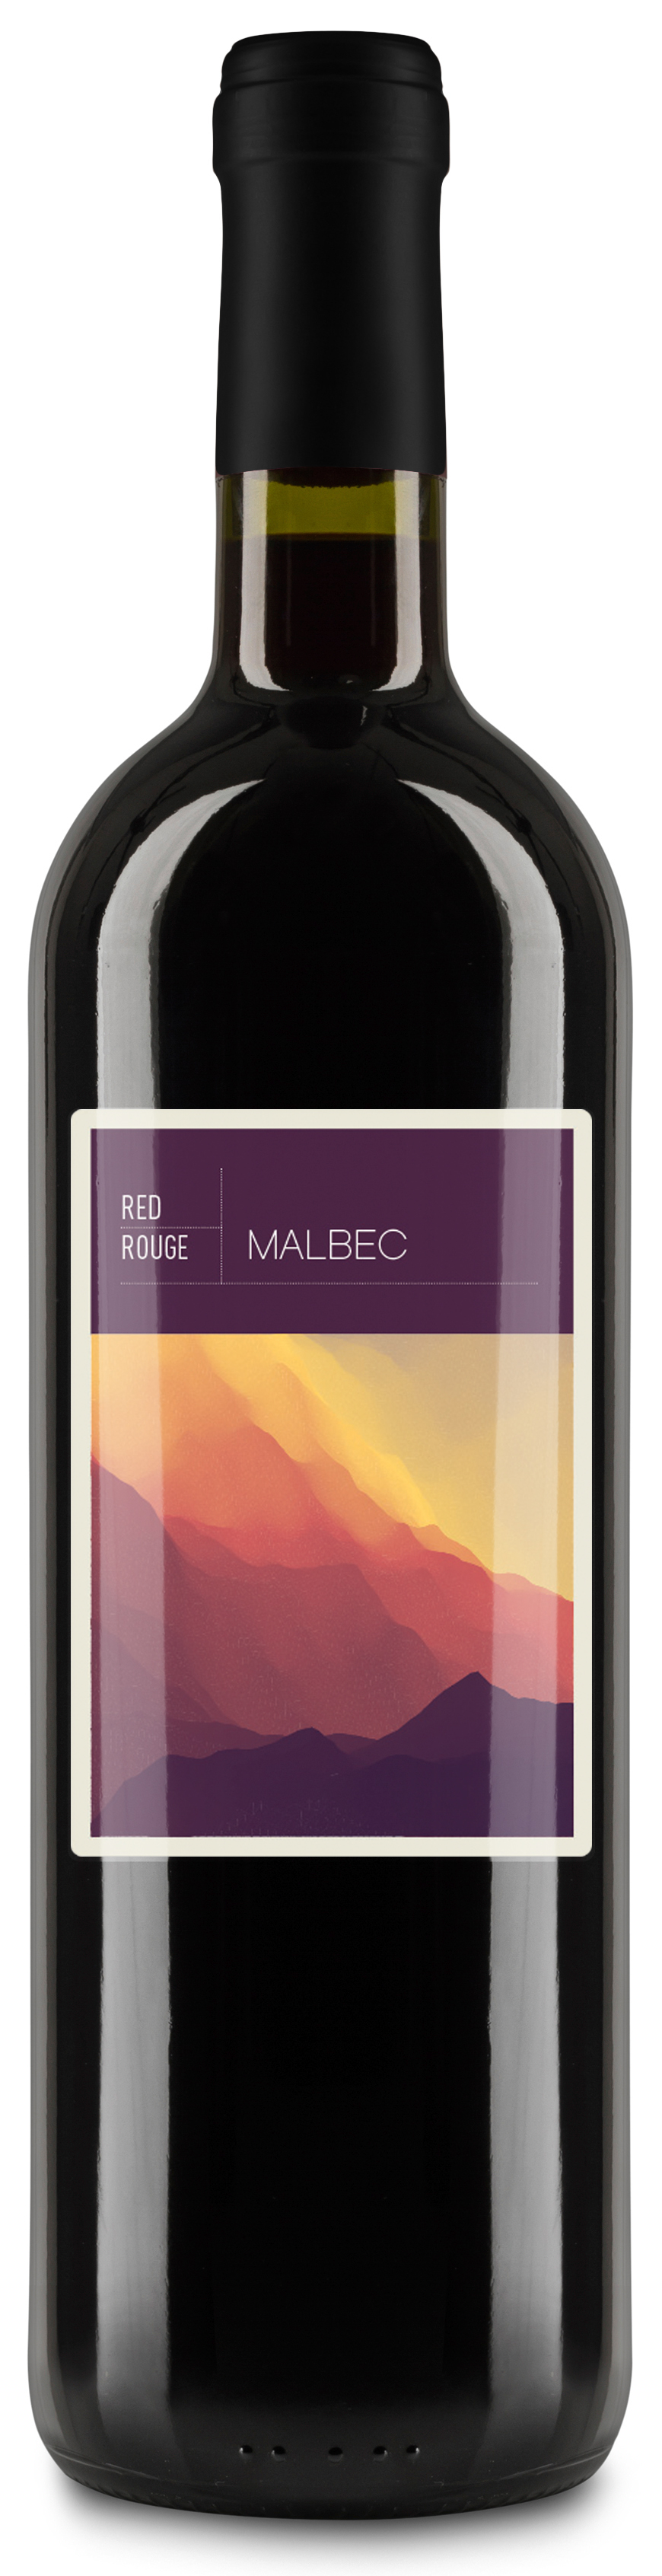 great malbec wine